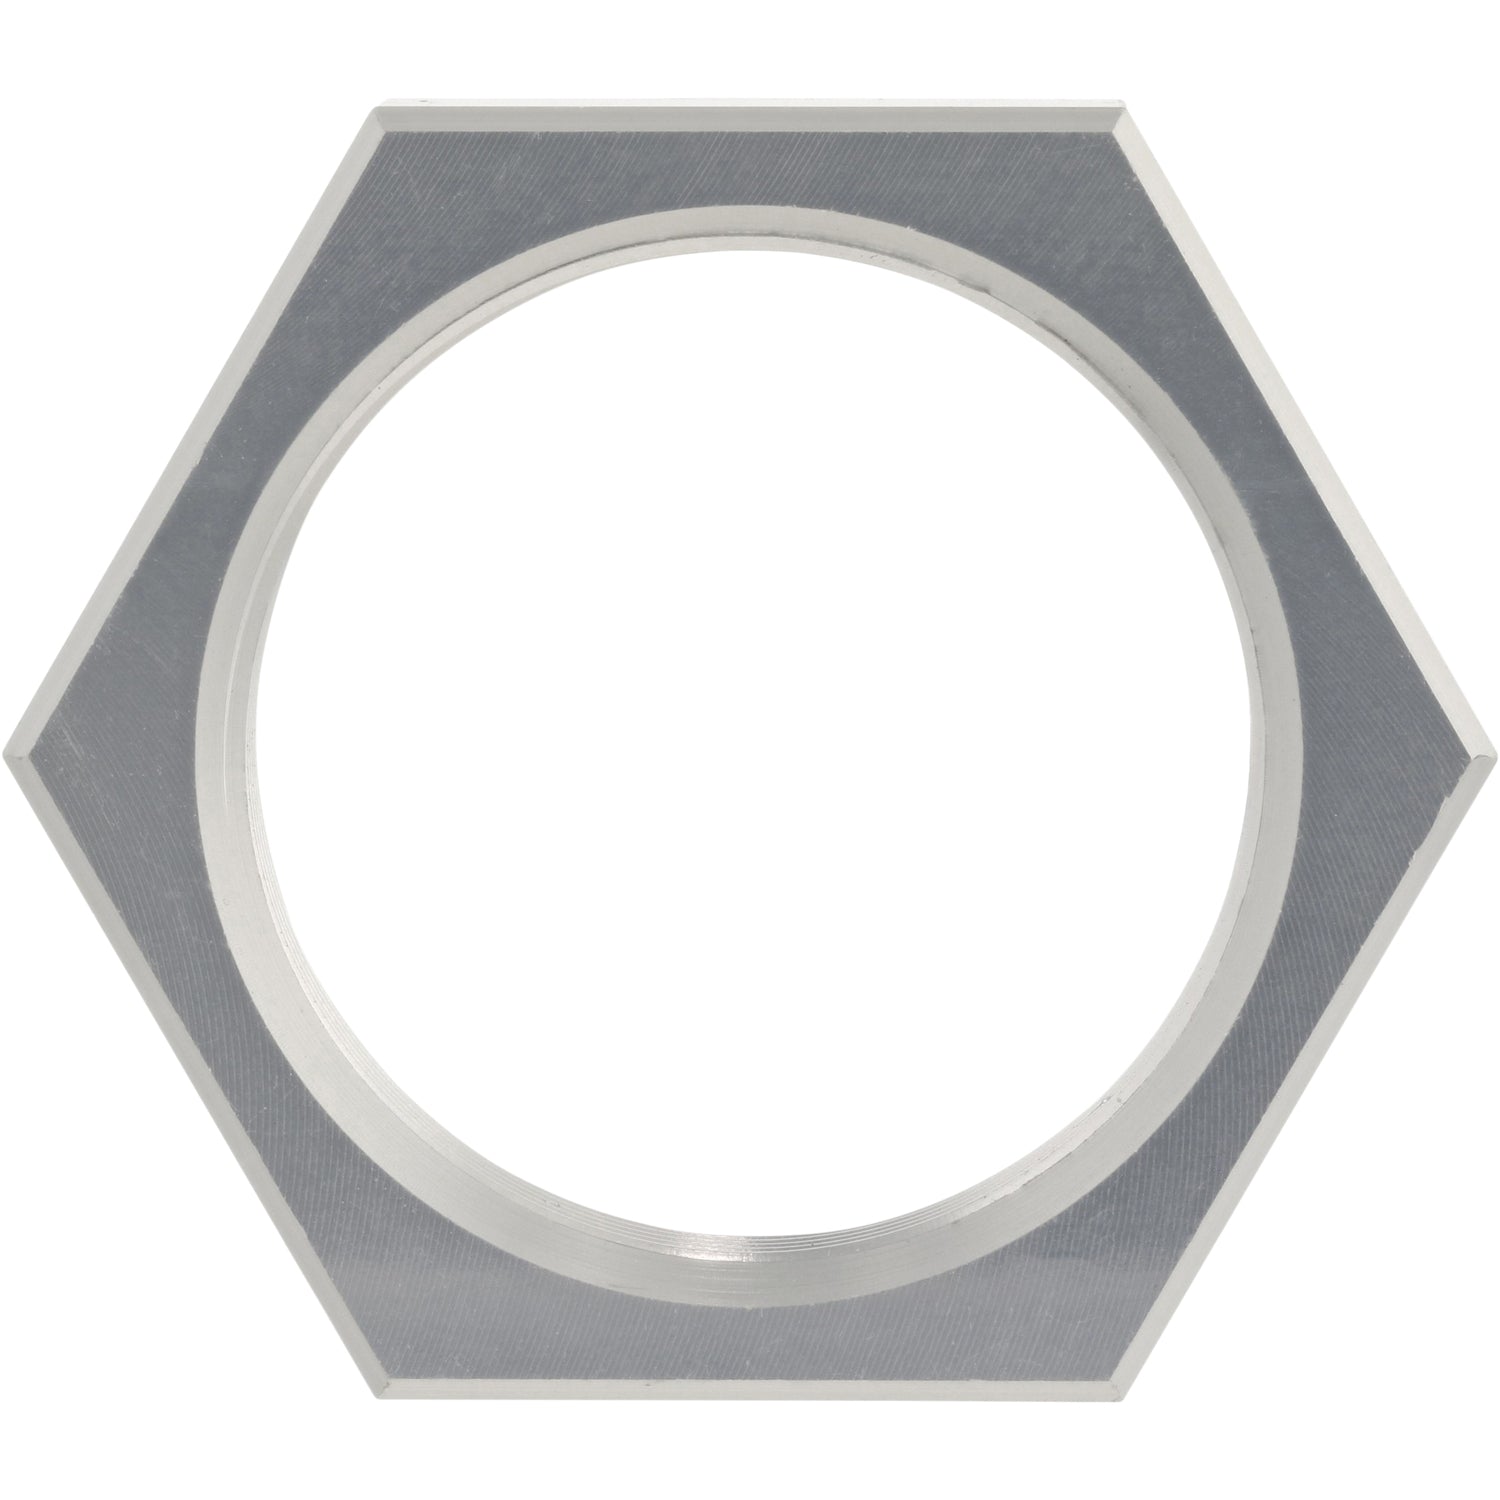 Hexagonal hard anodized aluminum nut with large threaded center hole. Part shown on white background. 